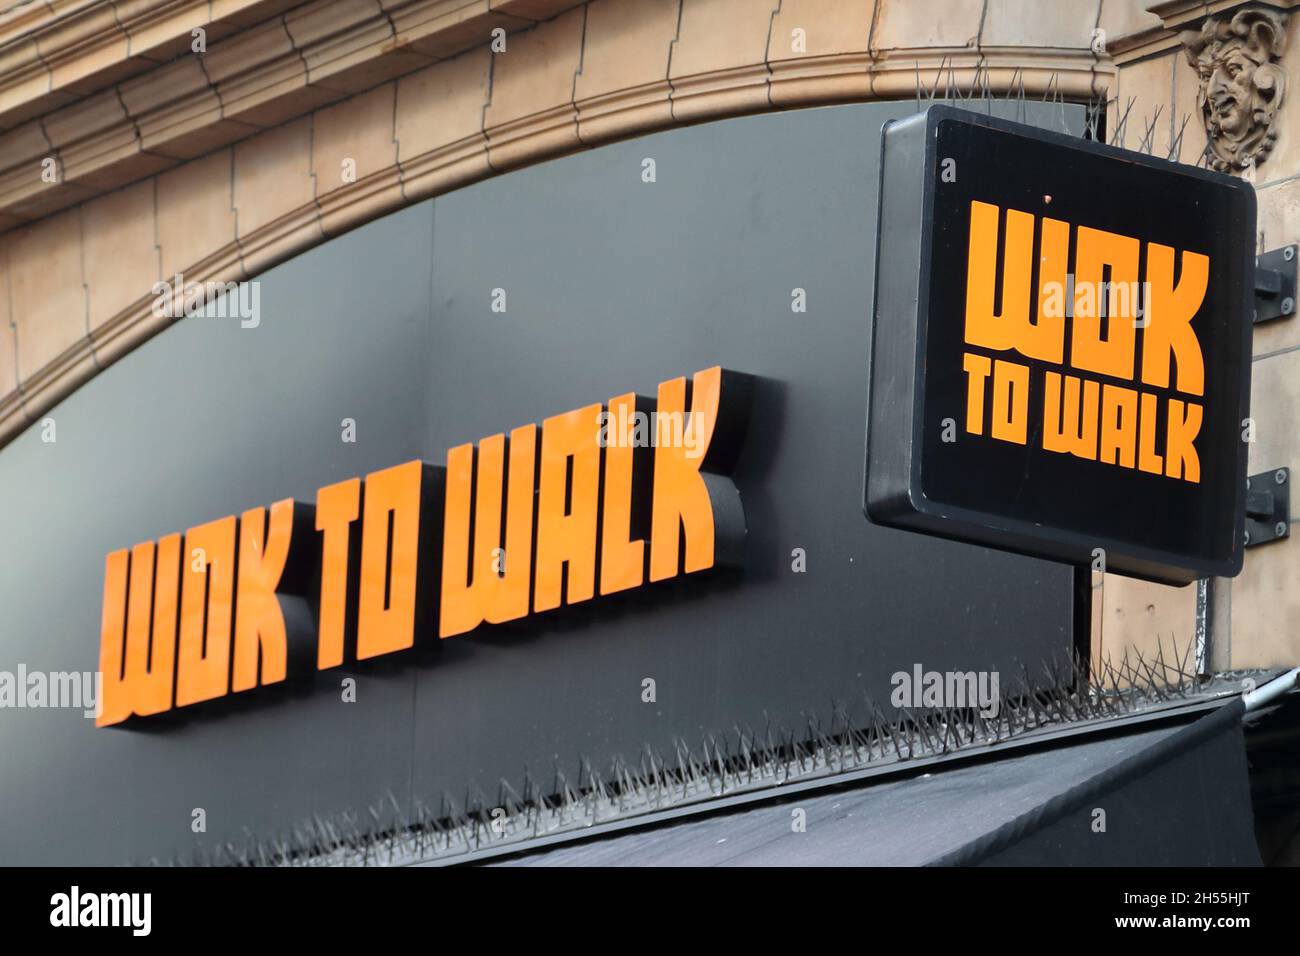 Wok to Walk logo above a restaurant in London, UK Stock Photo - Alamy